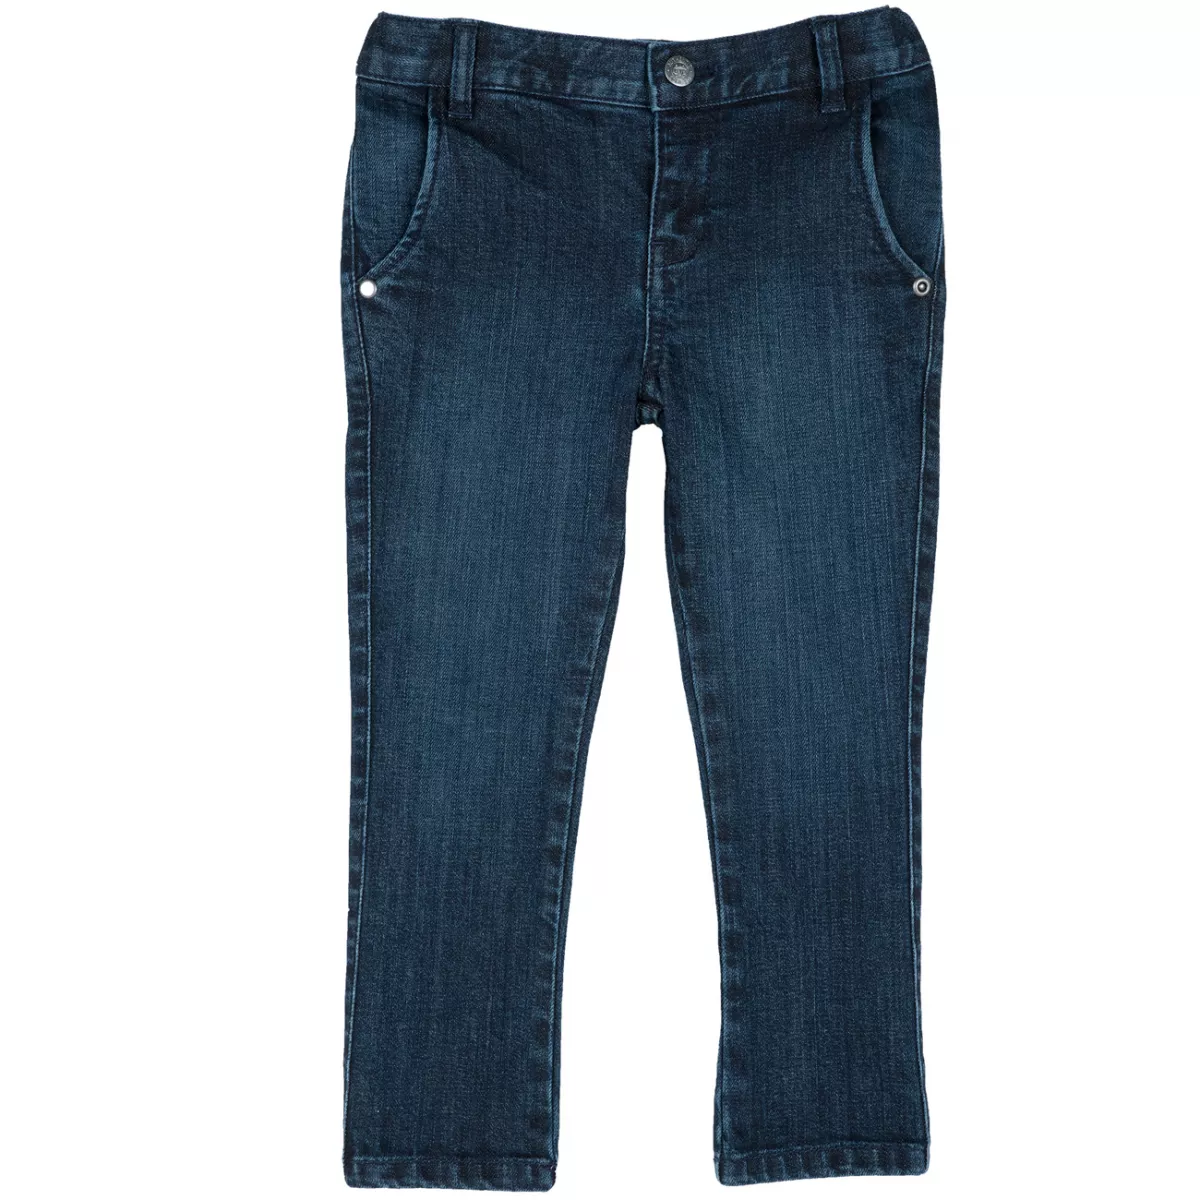 Pantaloni jeans copii Chicco, albastru inchis, 122